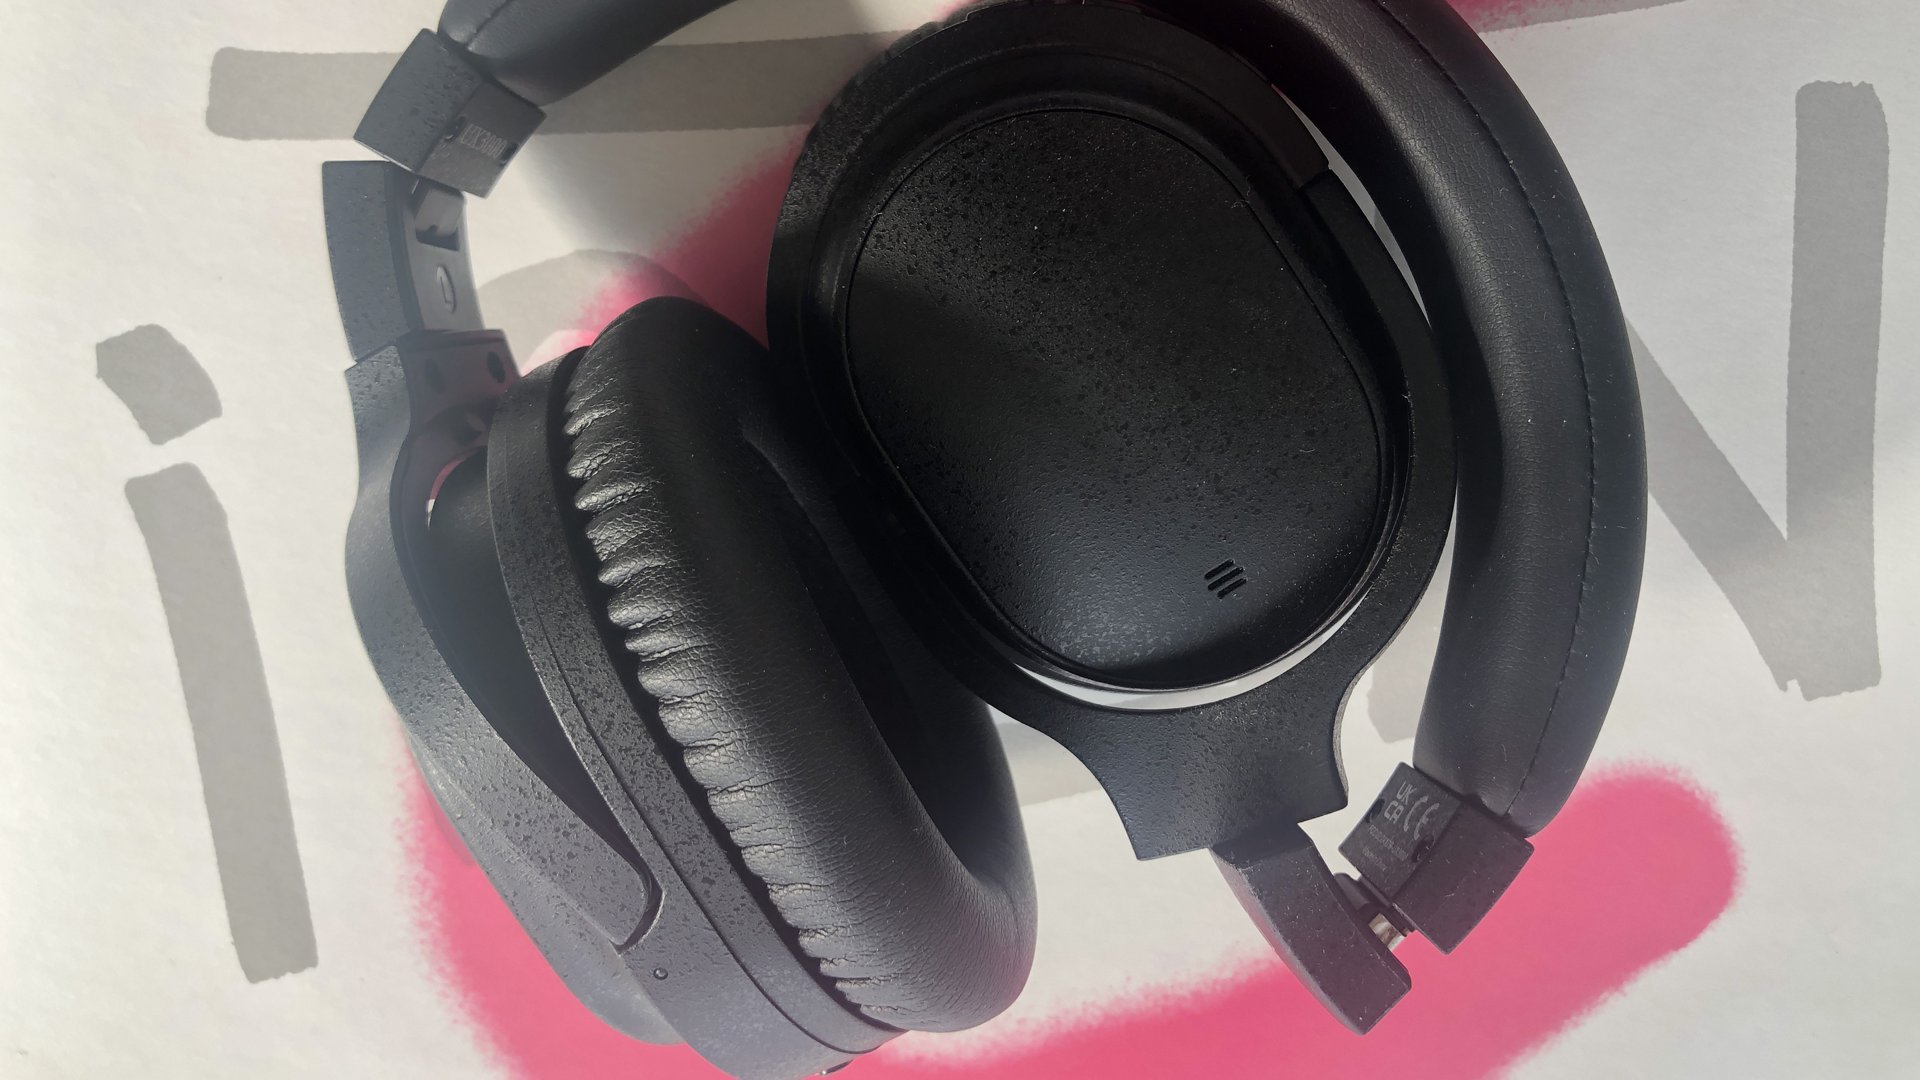 Latest UX3000 Folded Back In-Ear Audio Headphones